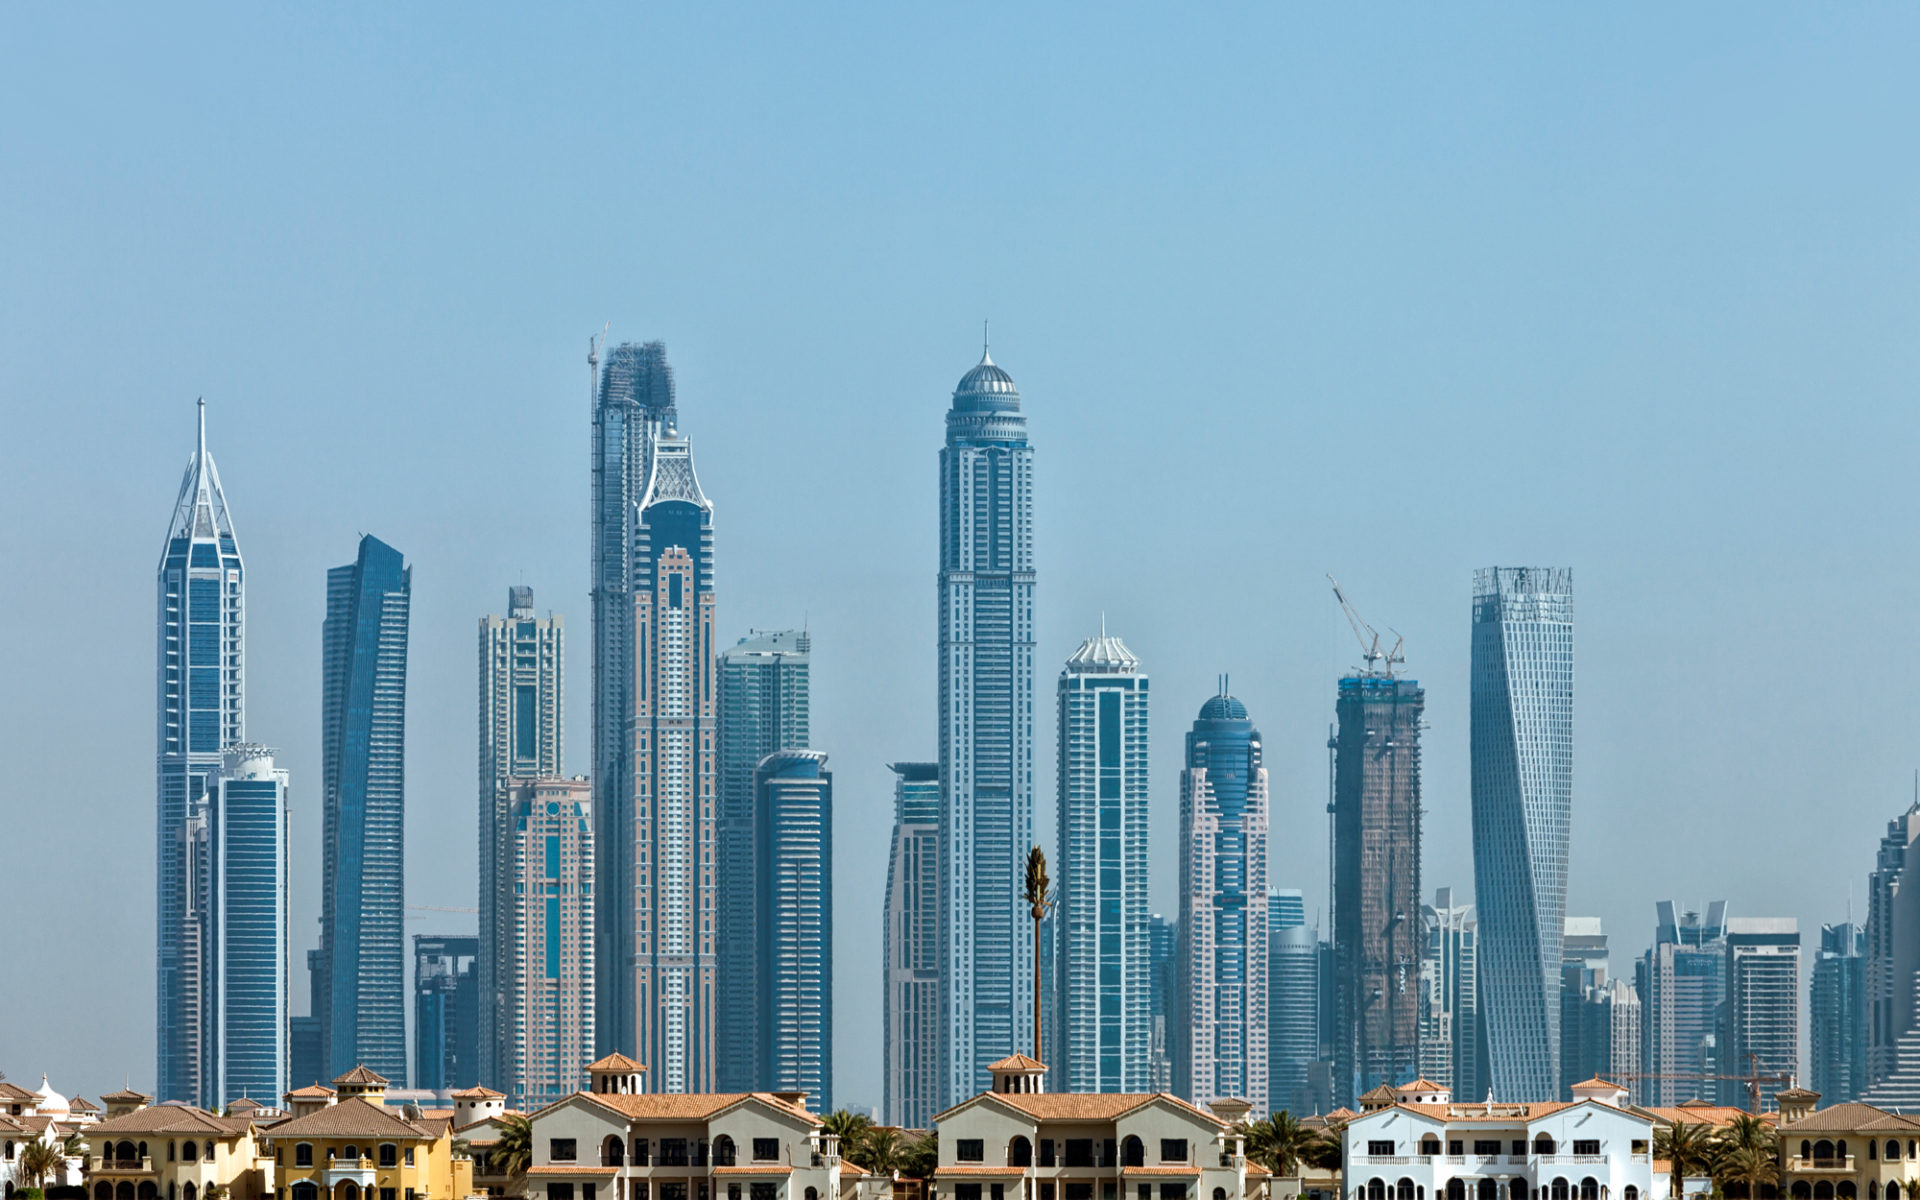 4. Marina 101 (Дубай, ОАЭ) – 427 метров.